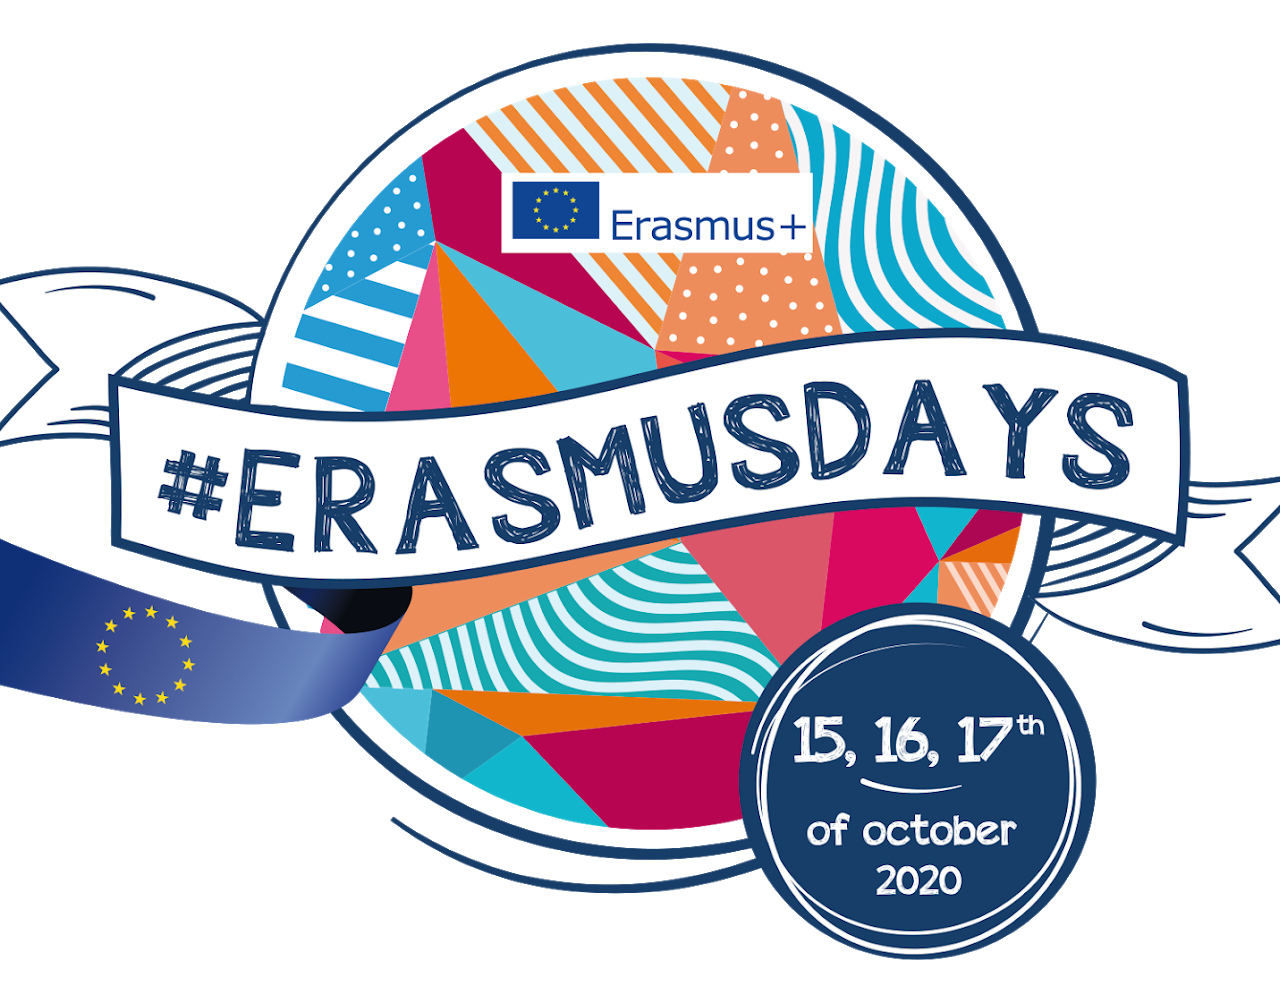 Erasmusdays2020